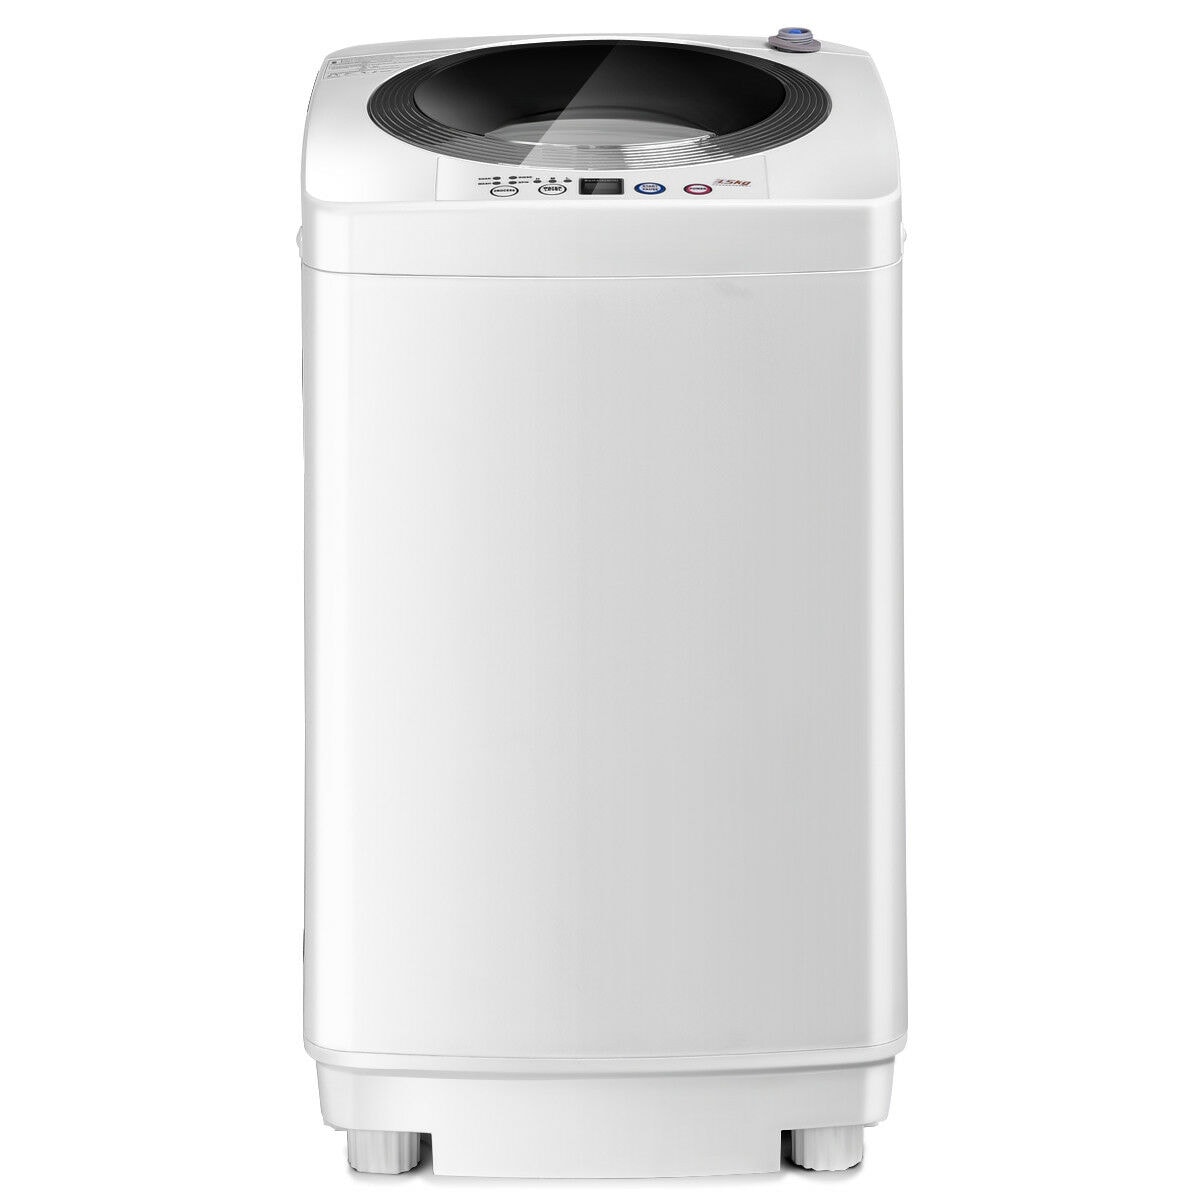  Giantex GT-US61100-FPGR Portable Washers, White & Gray :  Appliances